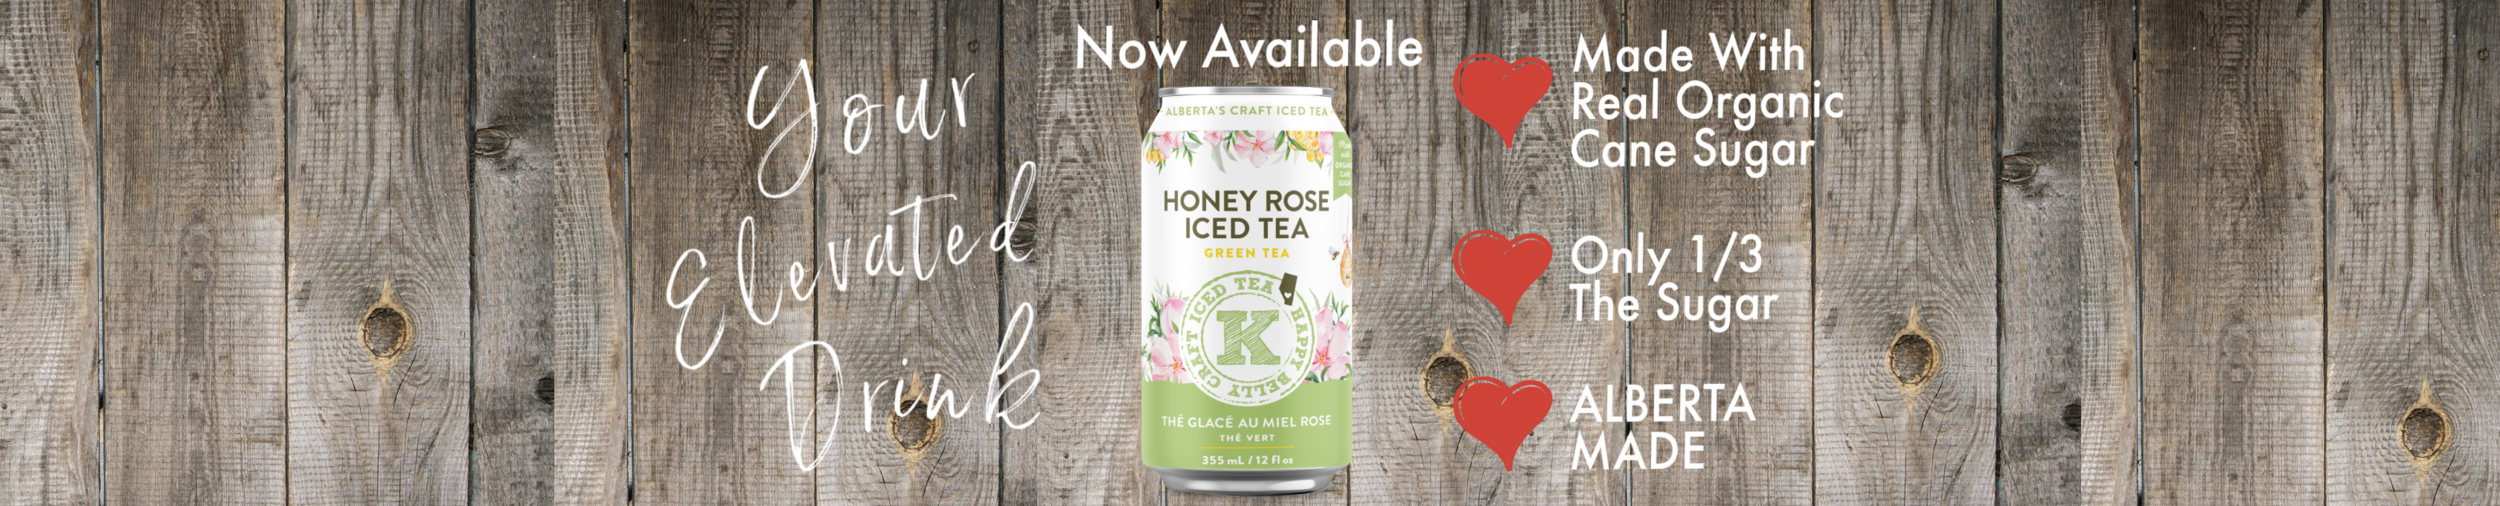 HBK WEB BANNER - HONEY ROSE ICED TEA - GREEN.png